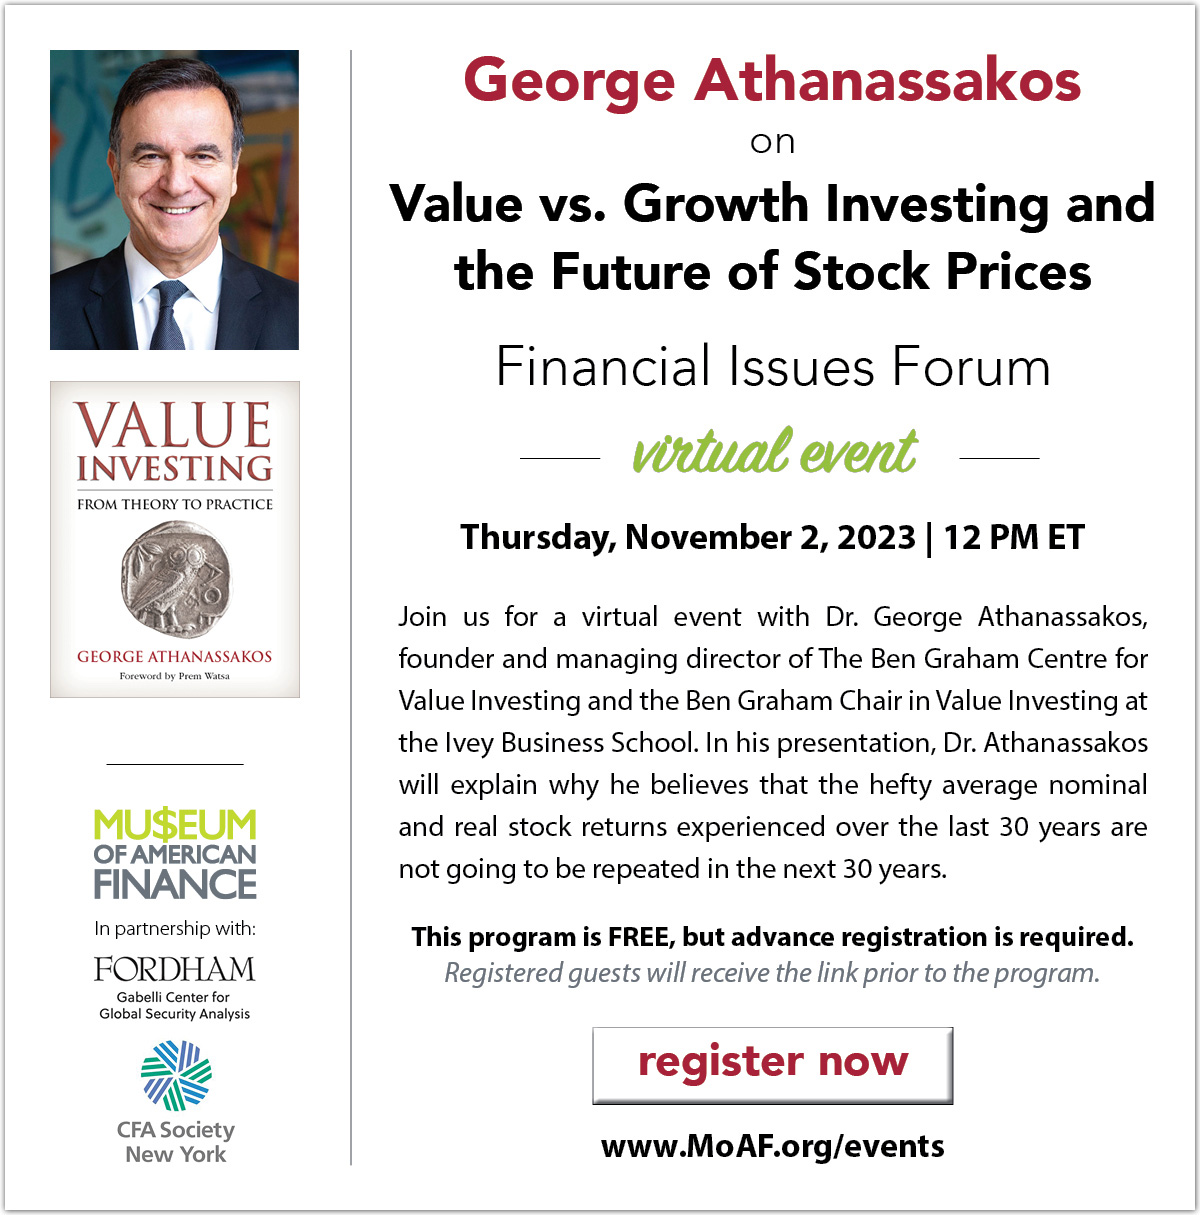 George Athanassakos on Value Vs. Growth Investing